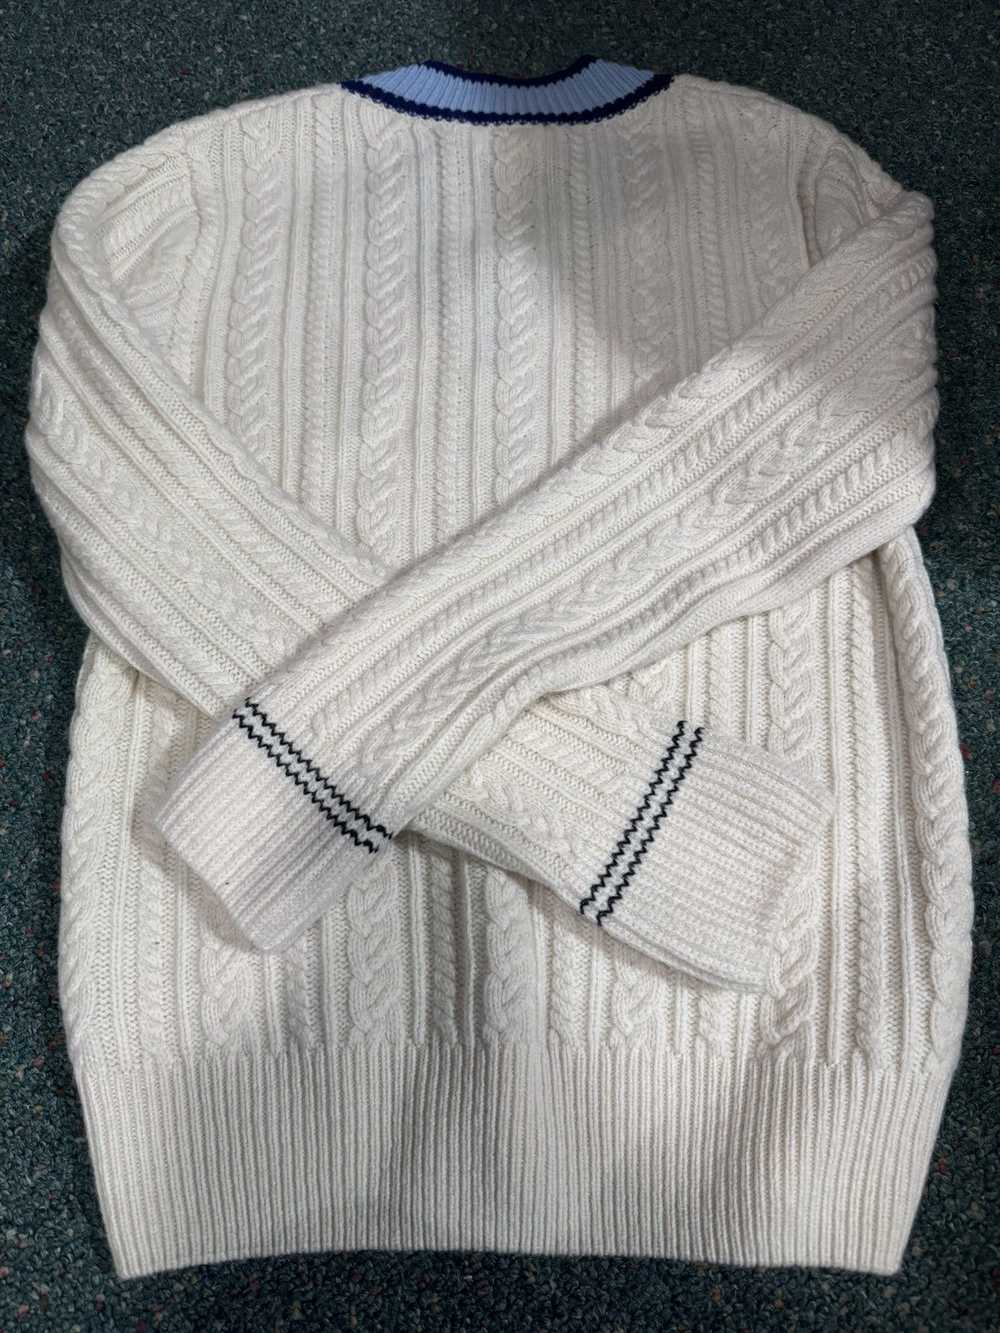 Lacoste Lacoste v neck cricket sweater - image 4